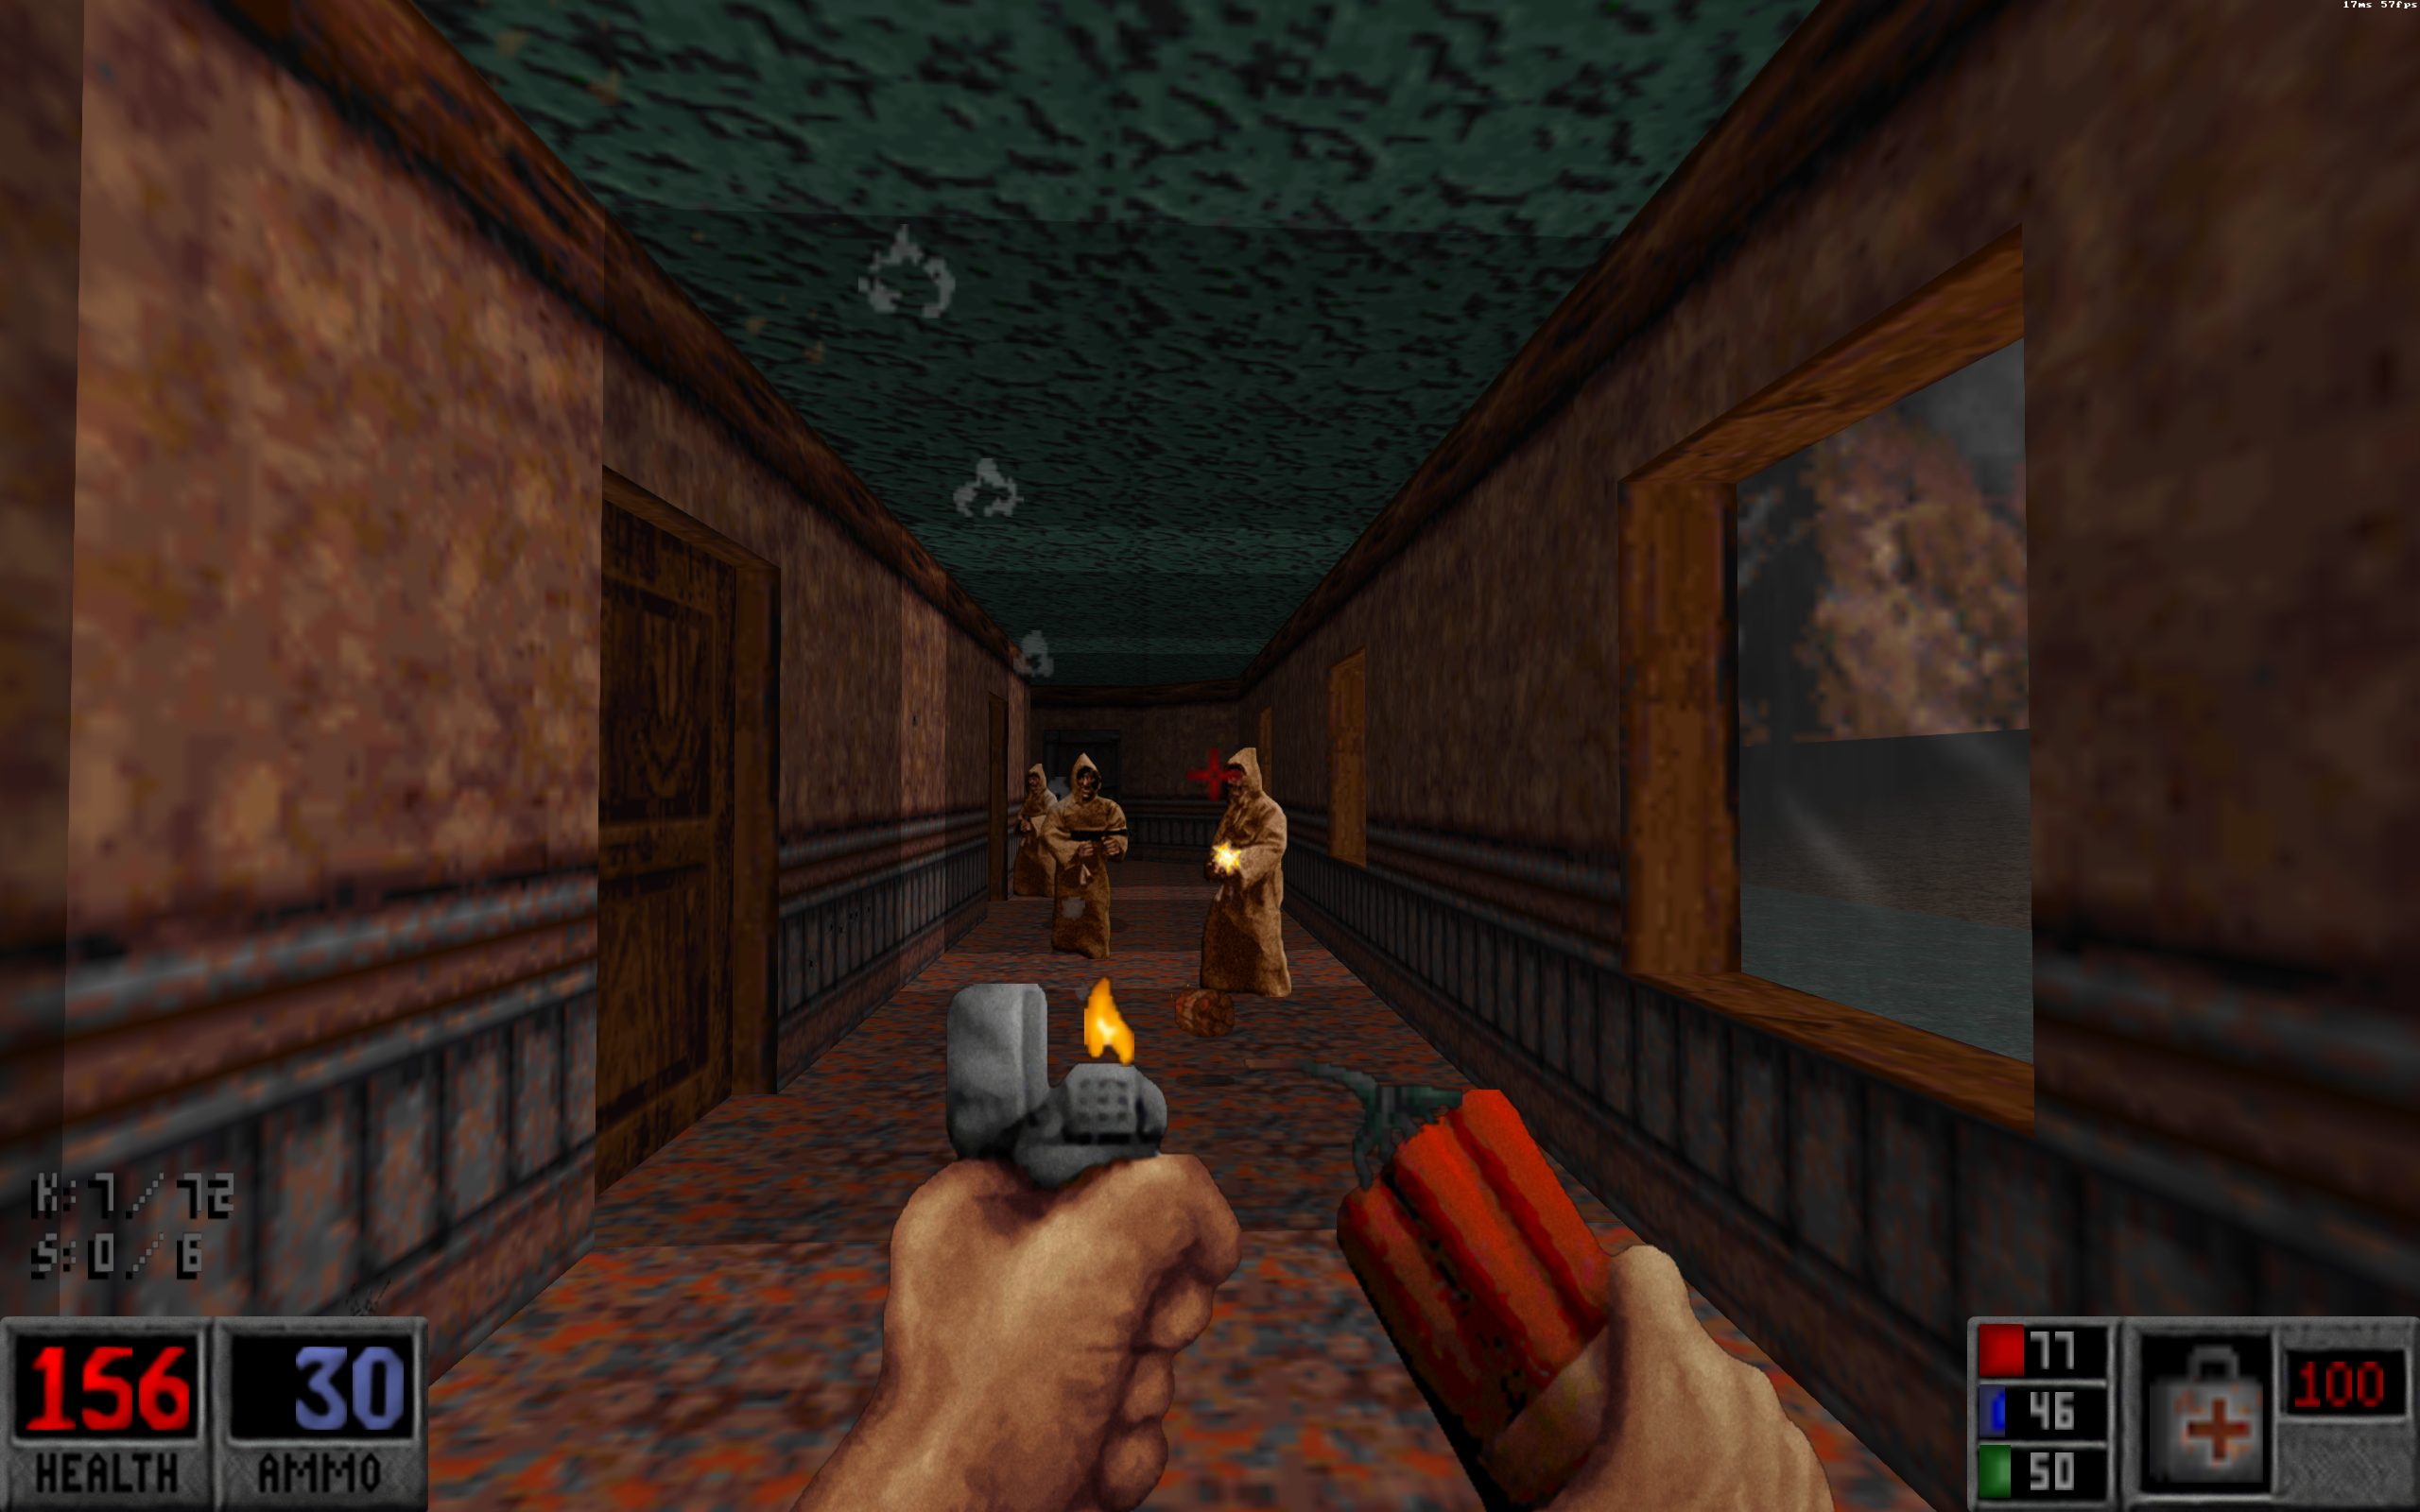 Duke Nukem 3D, Blood aj.: Zahrajte si nejlepší hry na Buildu 